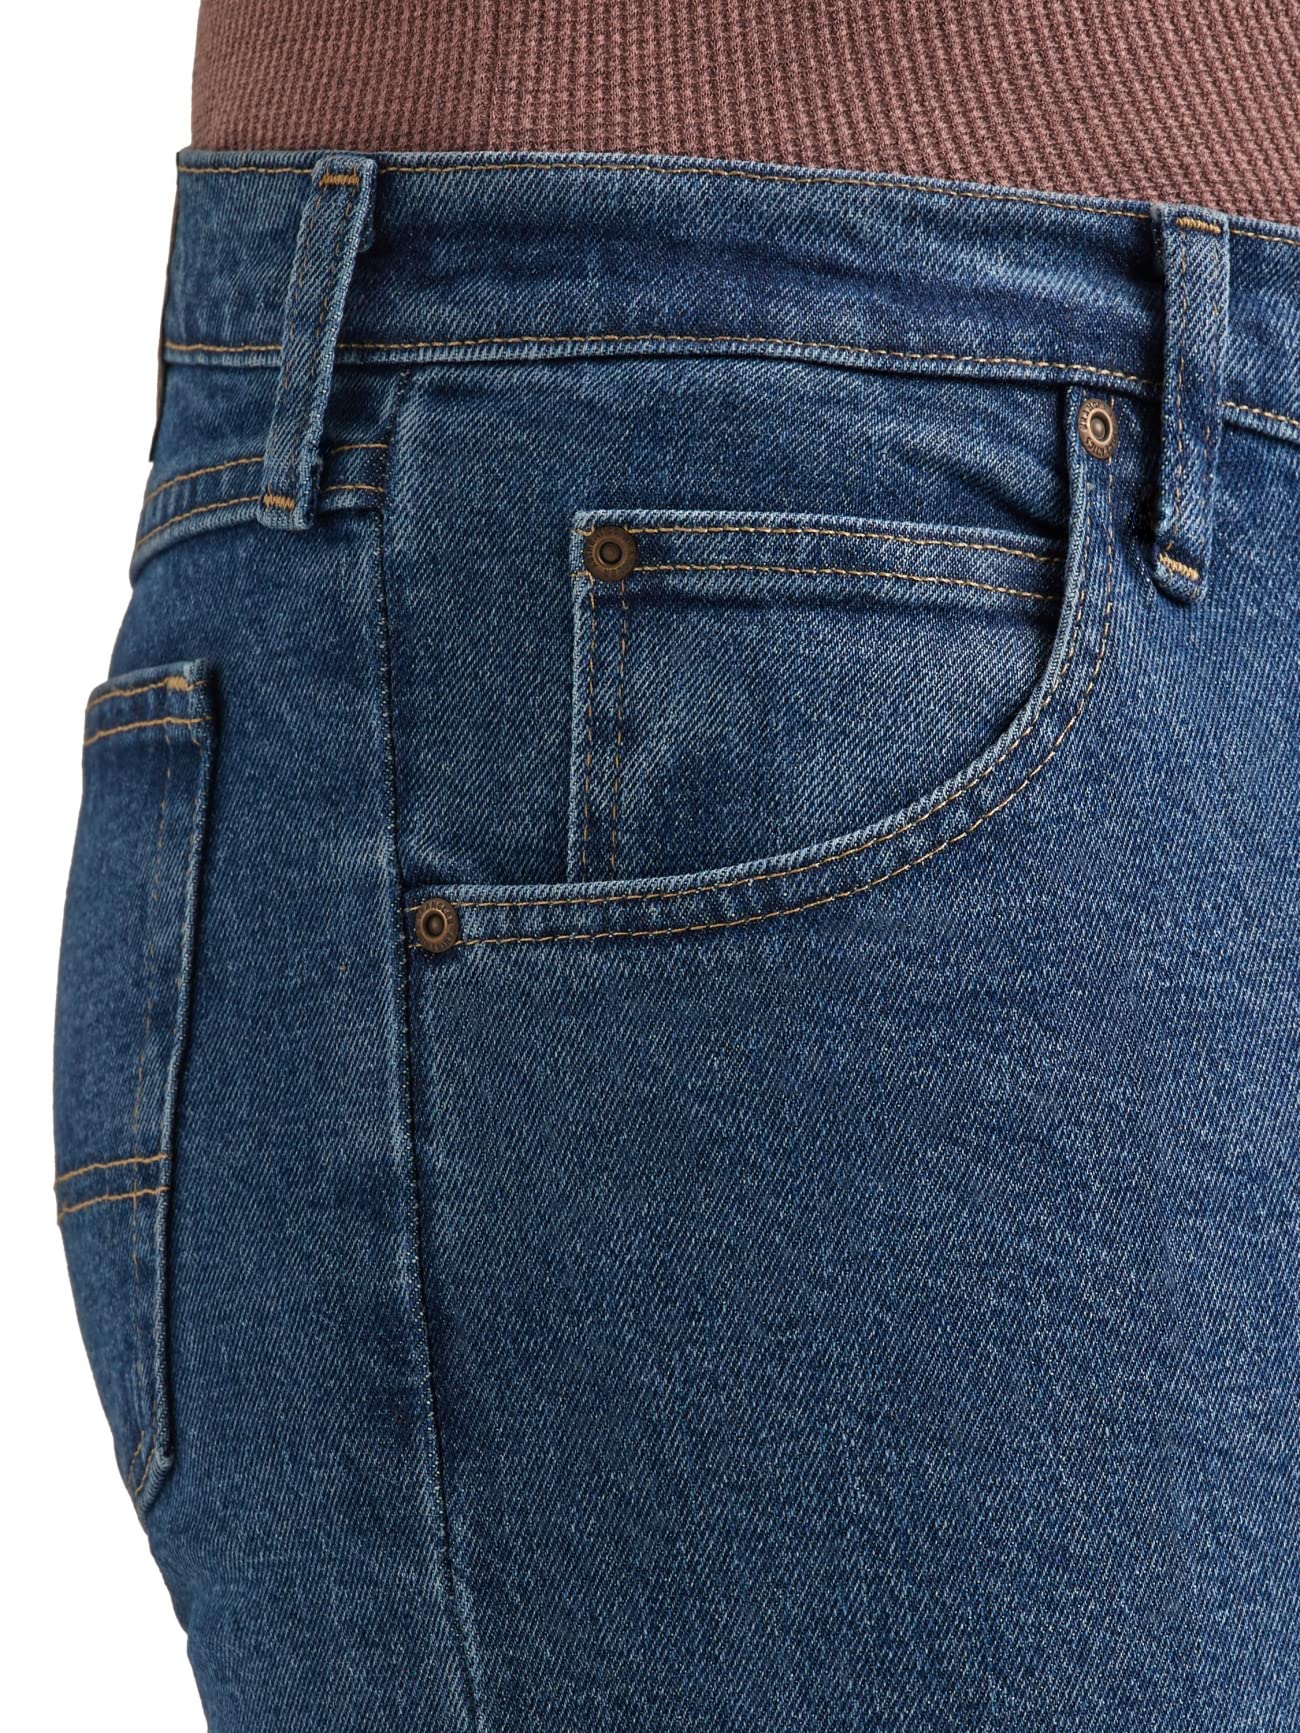 Wrangler Authentics Men's Classic 5-Pocket Regular Fit Jean, Dark Stonewash Flex, 32W X 29L